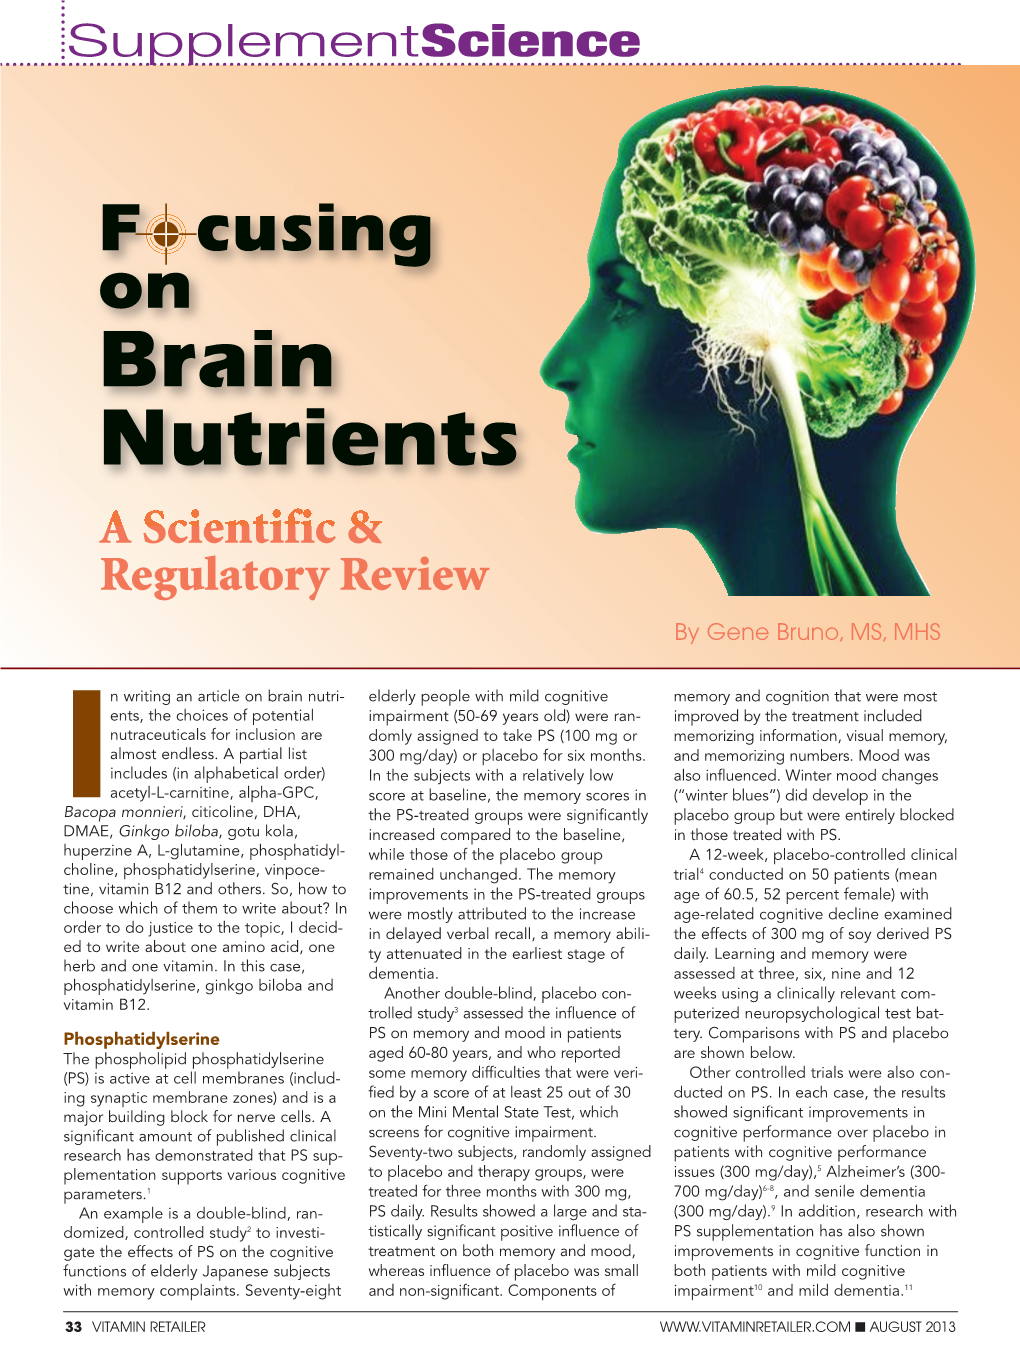 Brain Nutrients a Scientific & Regulatory Review by Gene Bruno, MS, MHS